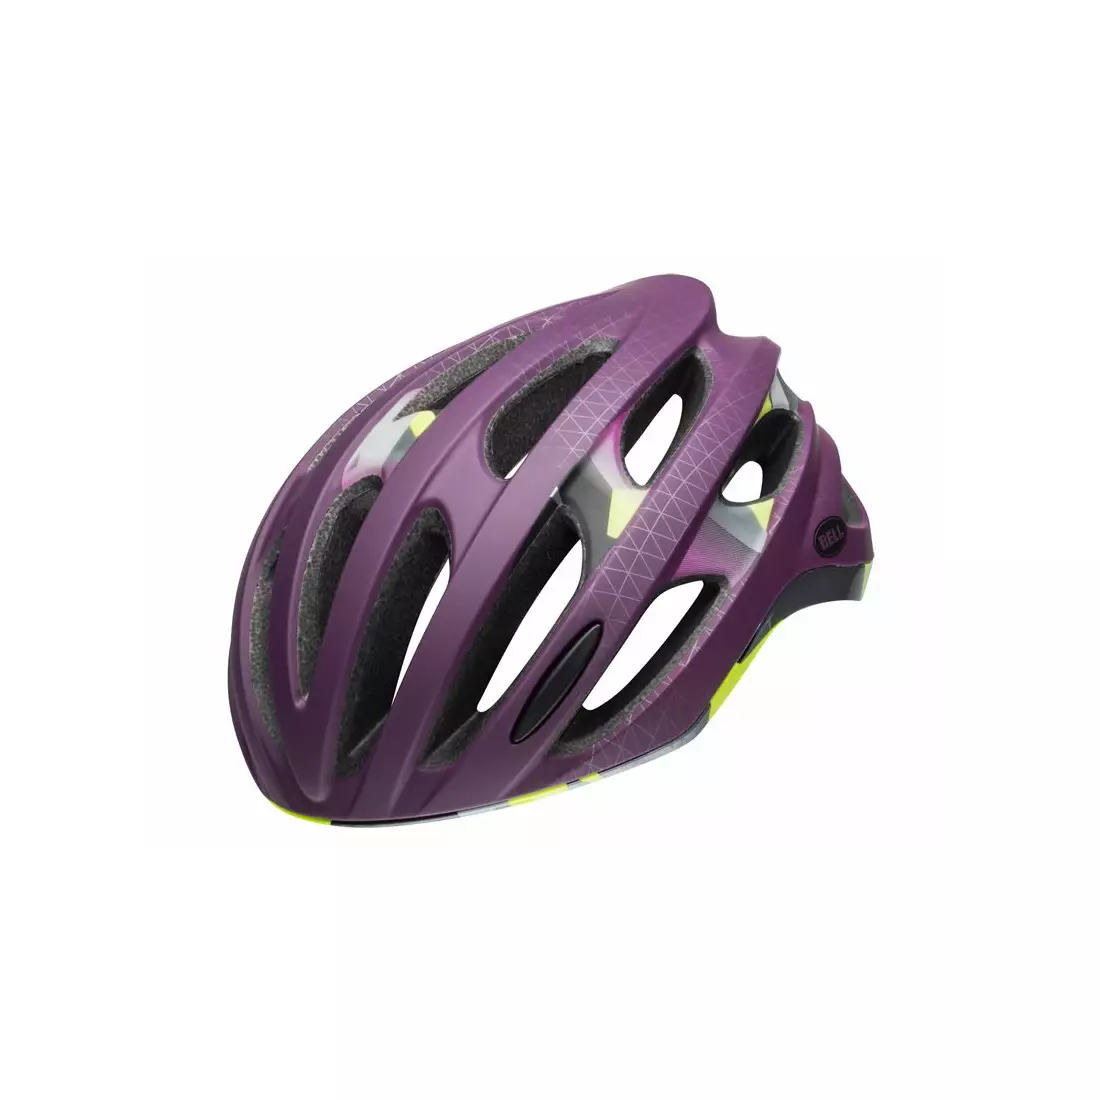 BELL FORMULA road bike helmet, matte plum deco